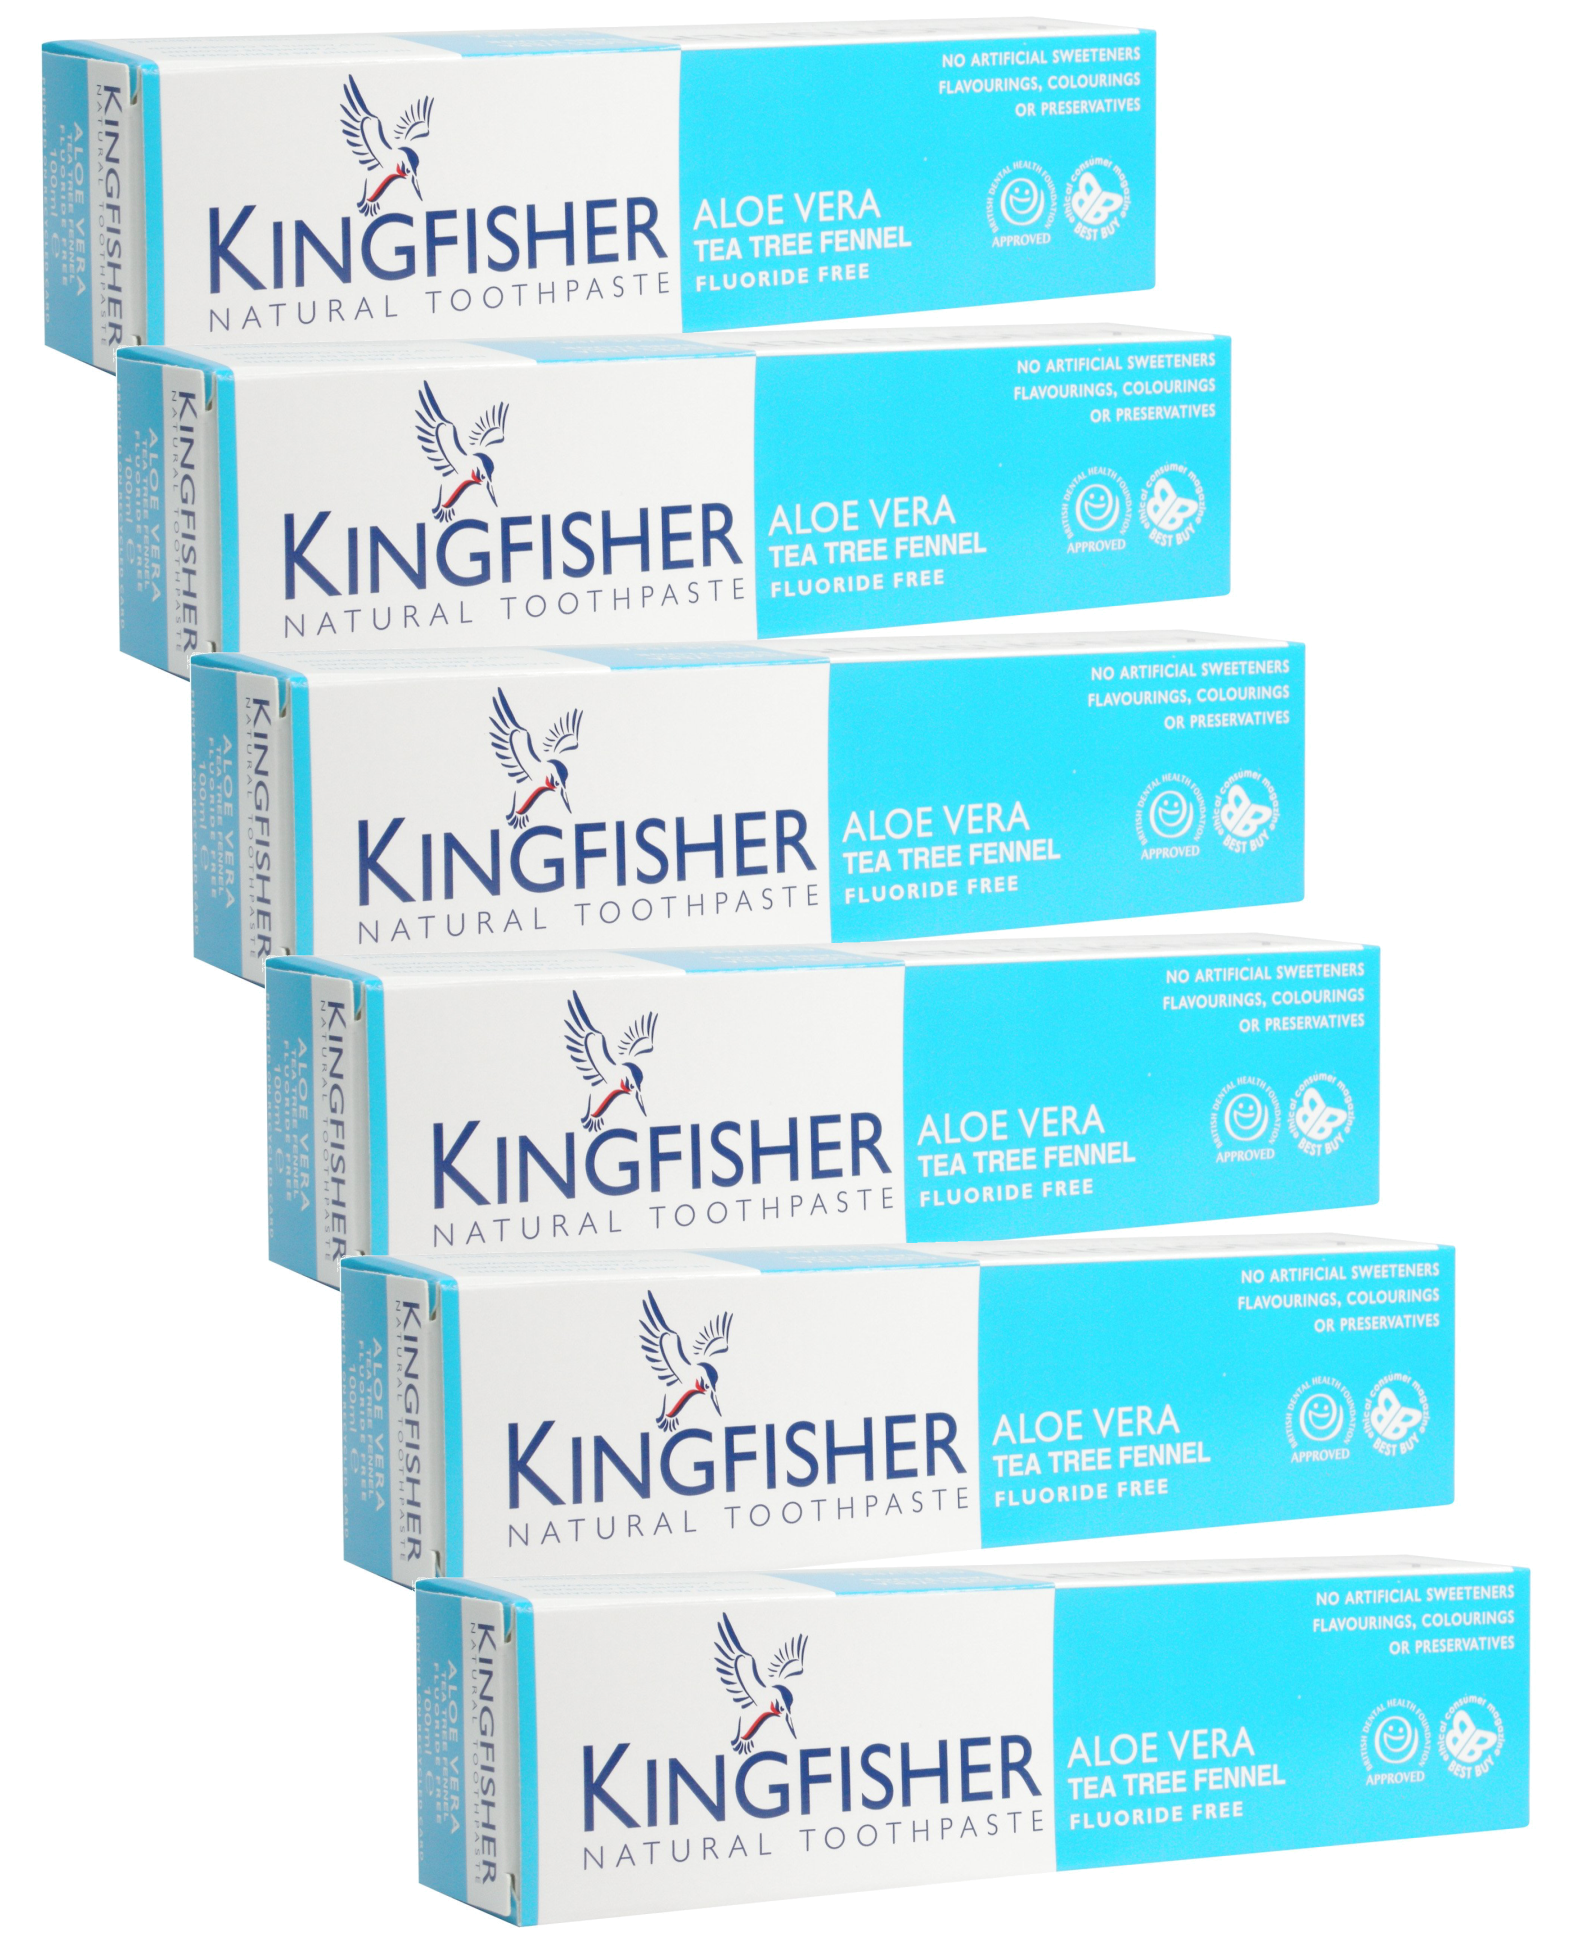 Kingfisher Toothpaste - Aloe Vera Tea Tree Fennel Fluoride Free Toothpaste (100ml) - Pack of 6